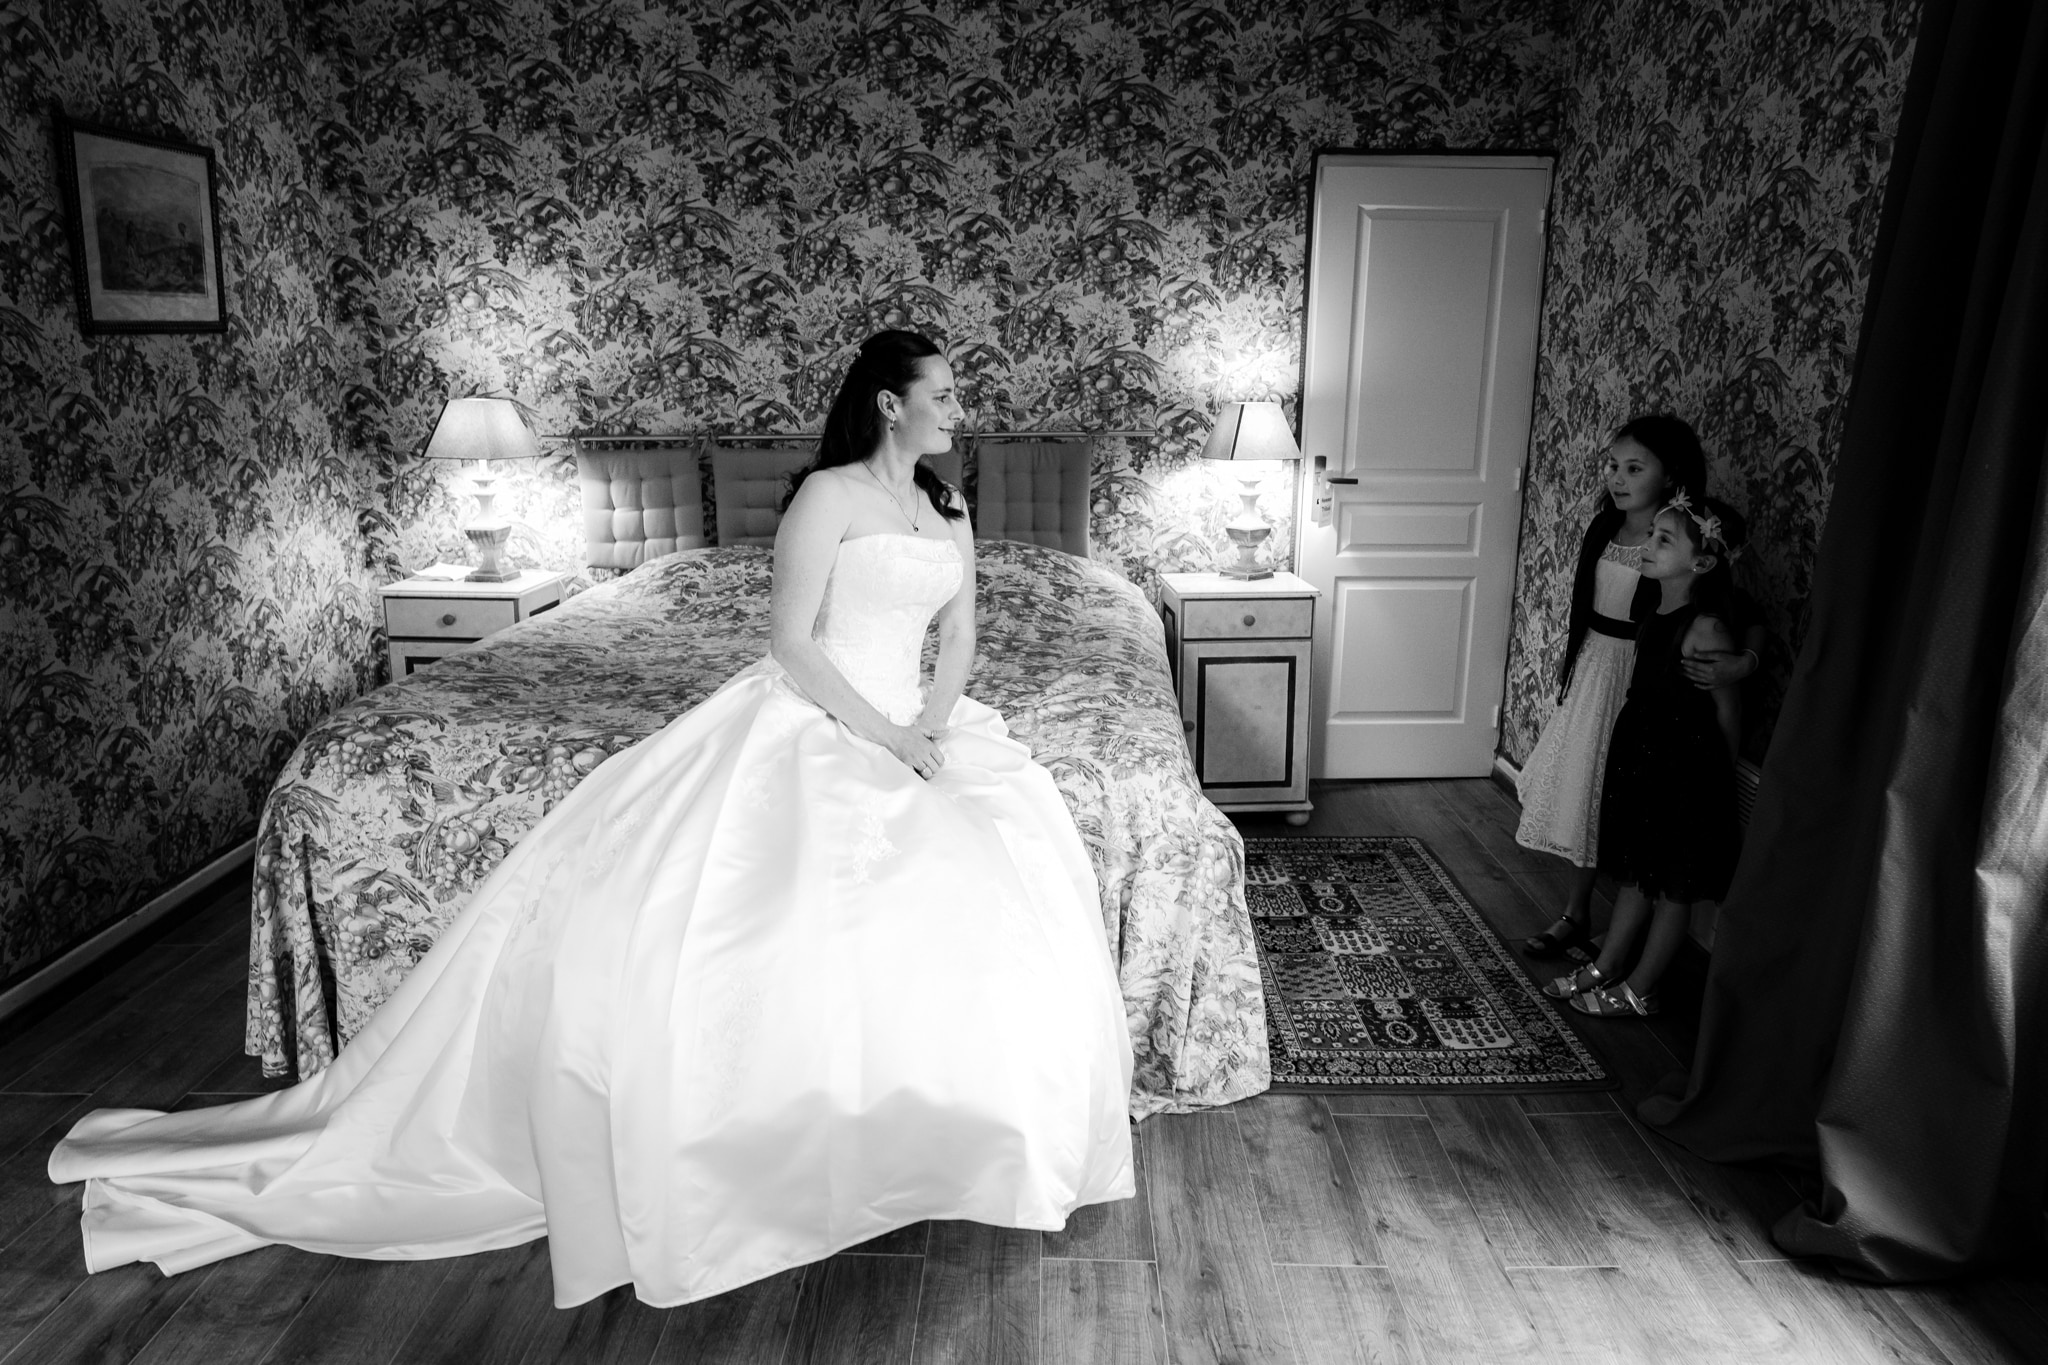 Photographe documentaire Photo-reportage mariage Loiret Gien